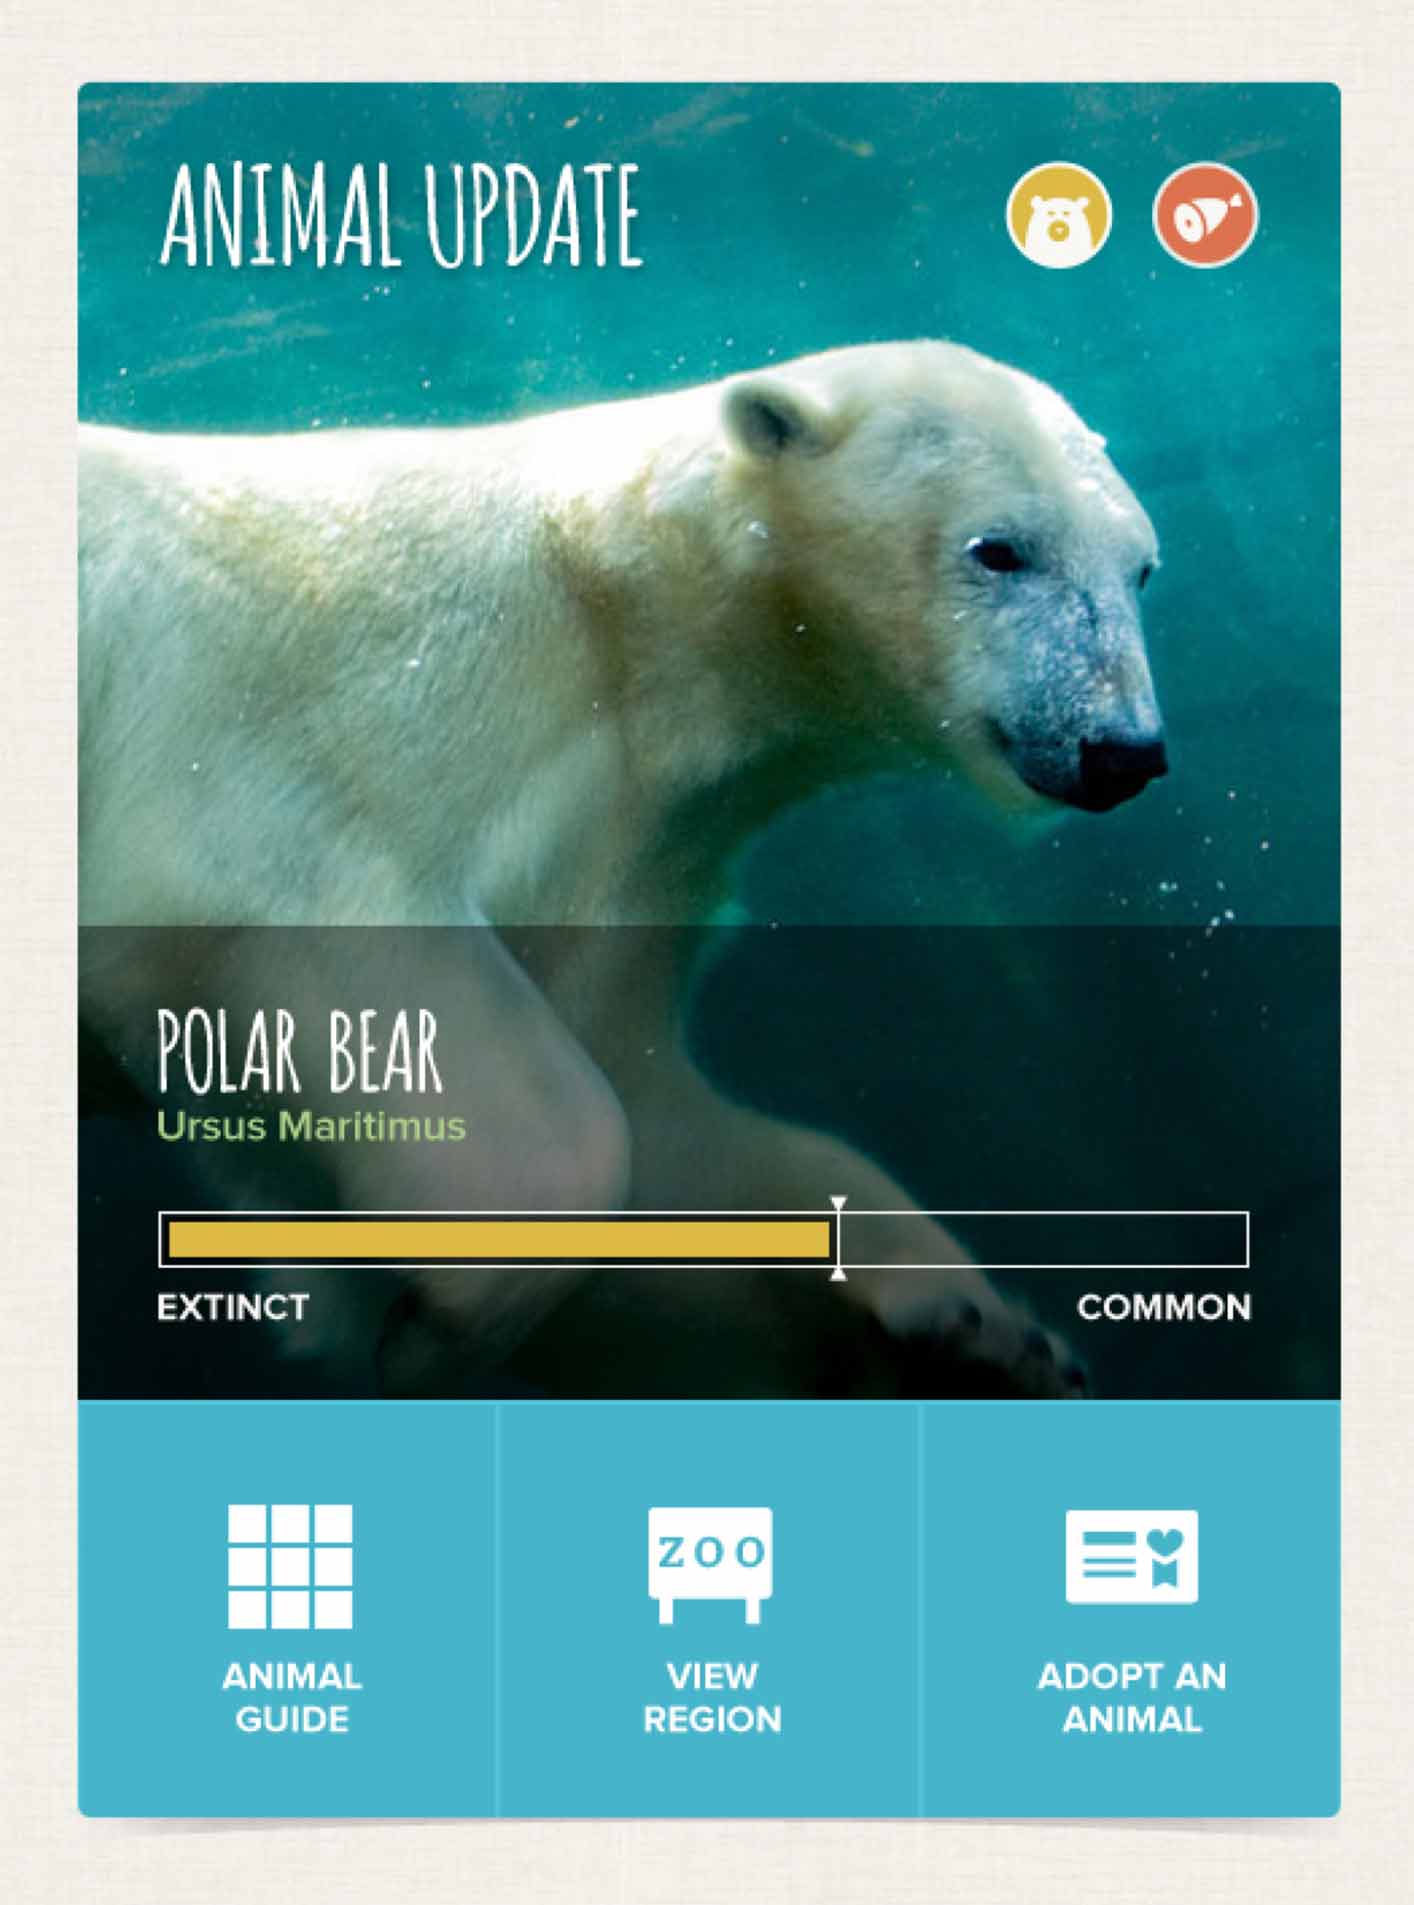 Columbus Zoo Website - Animal Update Module